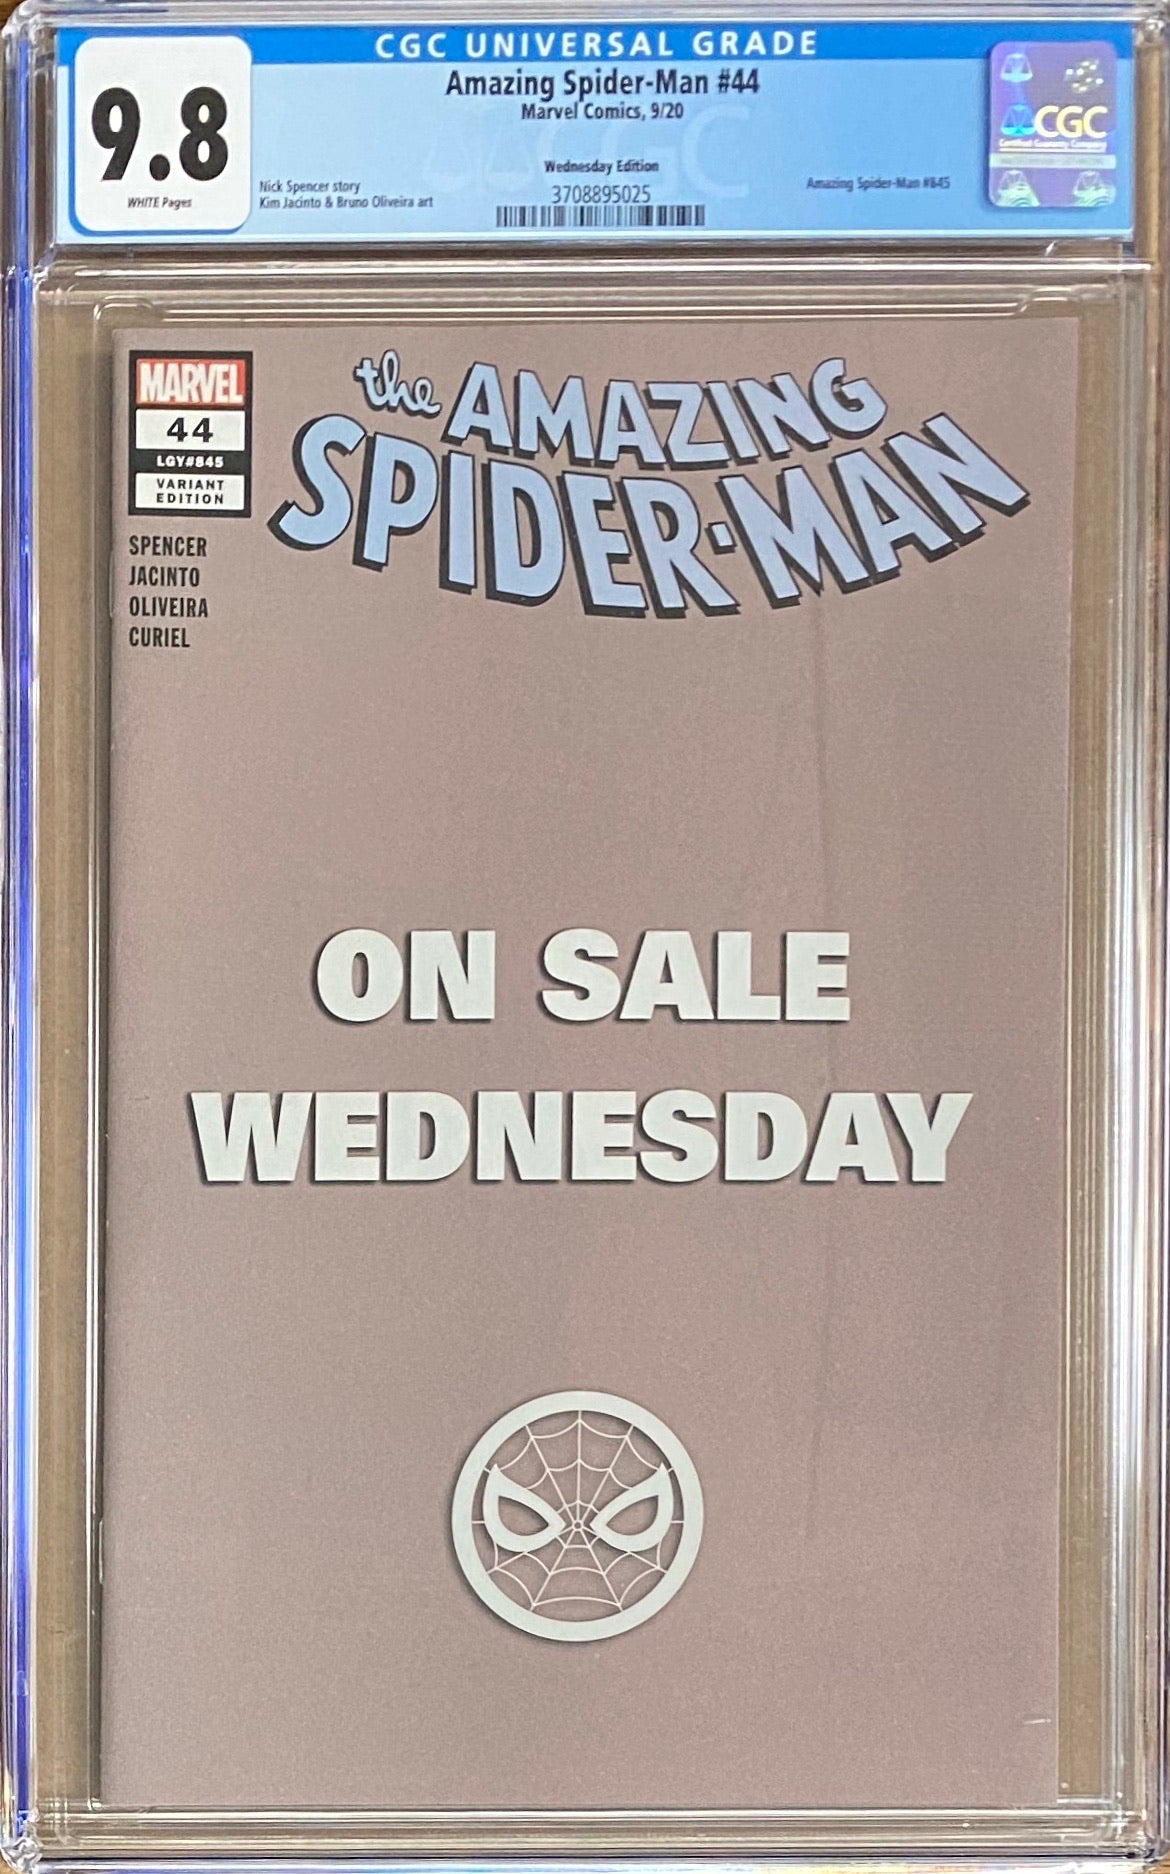 Amazing Spider-Man #44 "Wednesday" Variant CGC 9.8